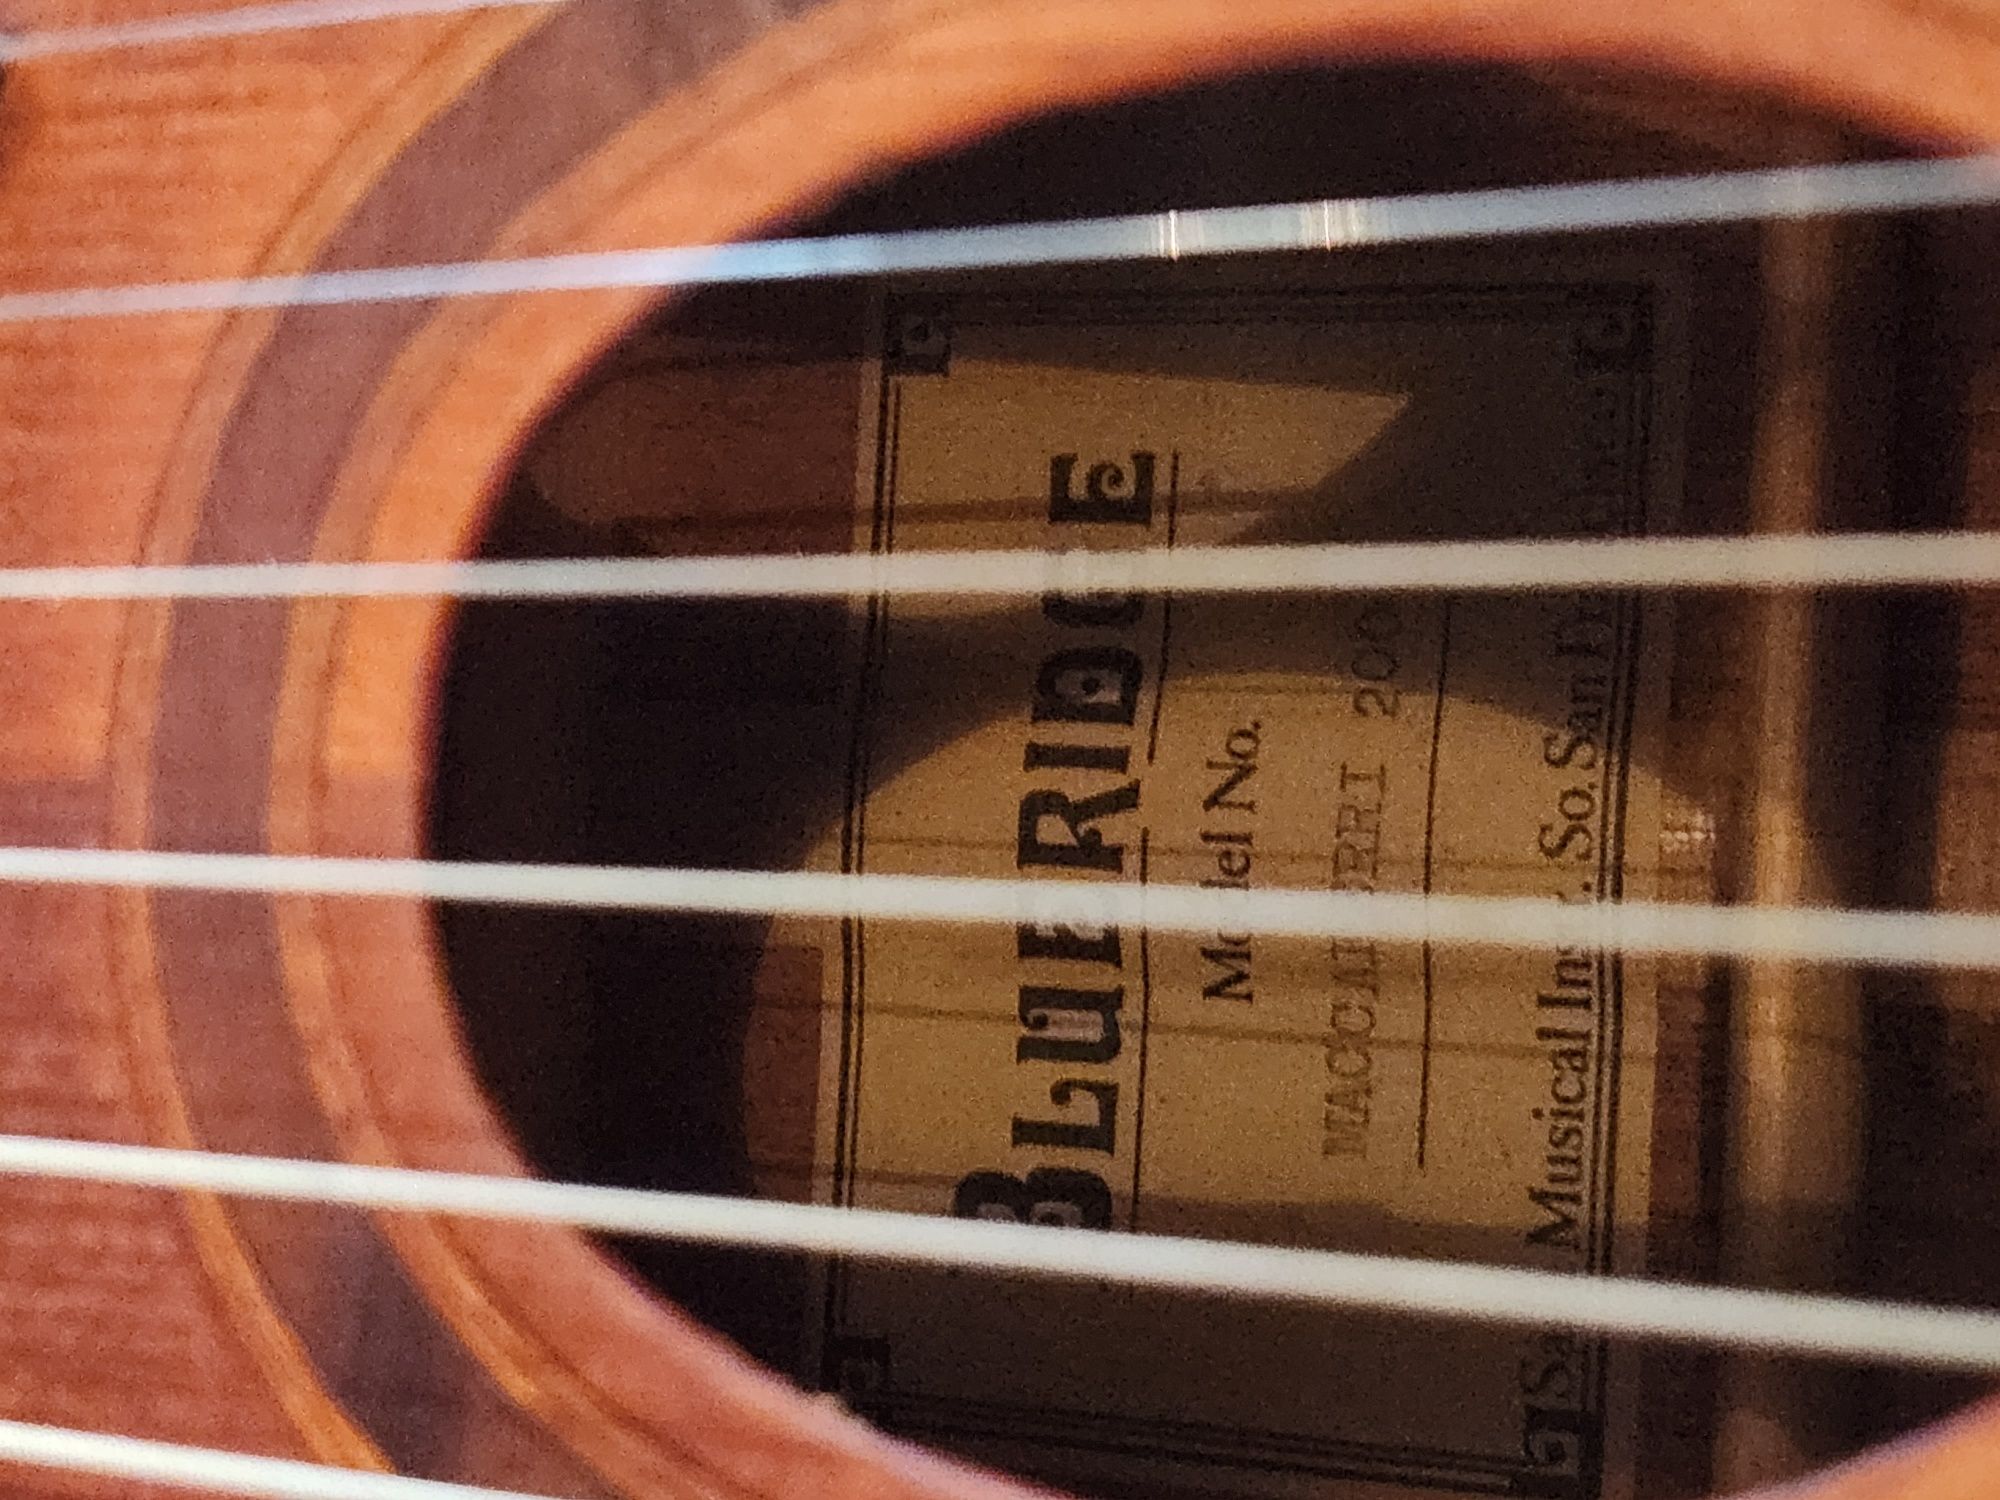 Gitara gypsy Blueridge MACCAFERRI 200